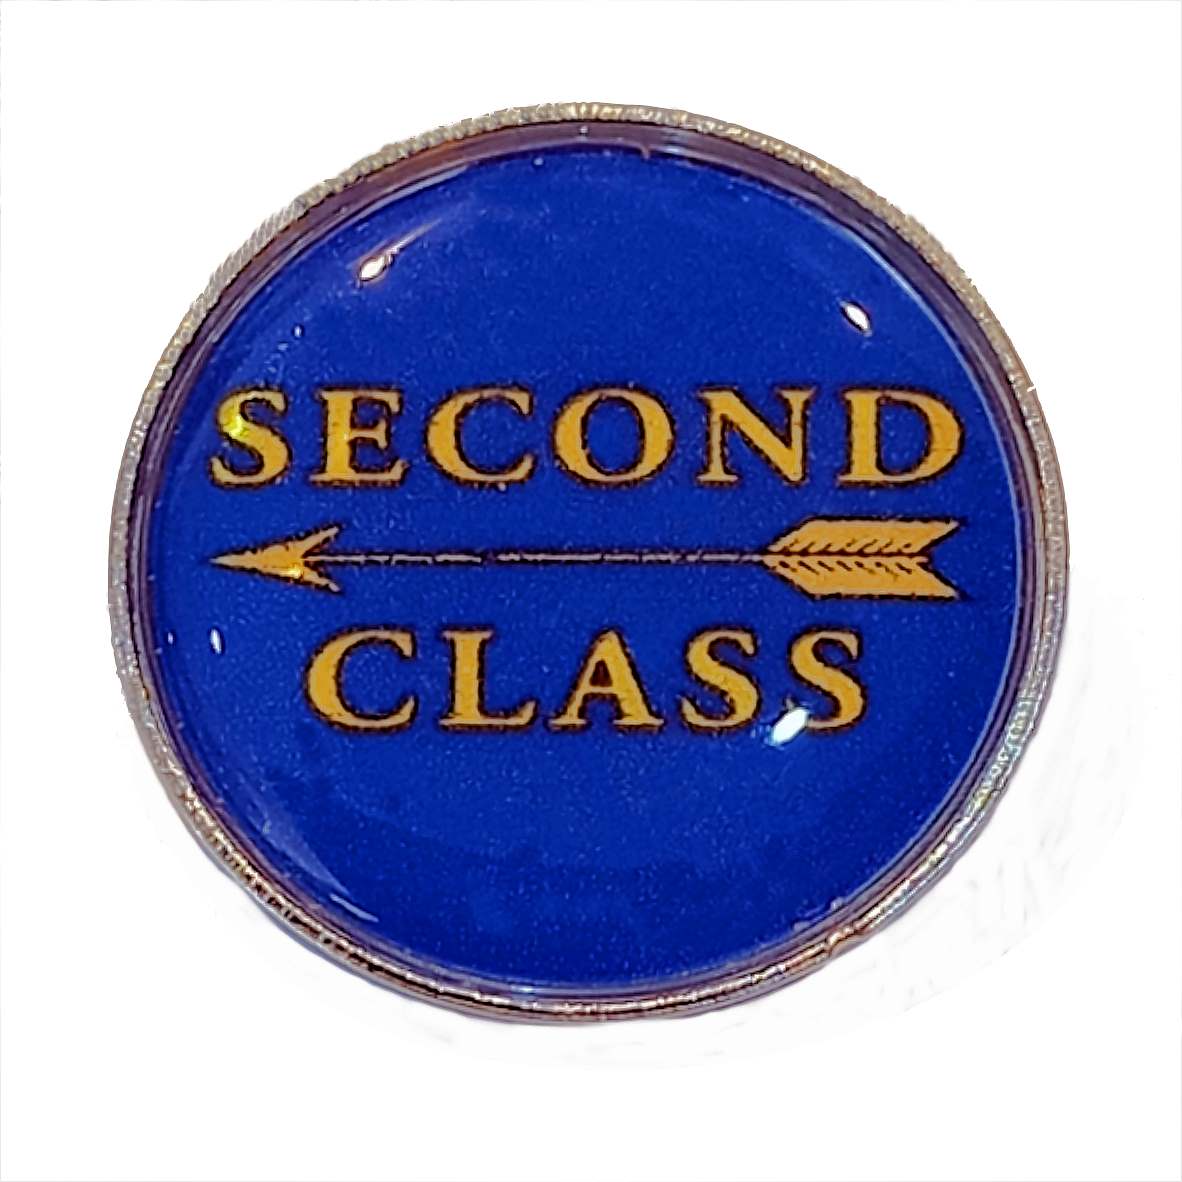 Class standard round badge